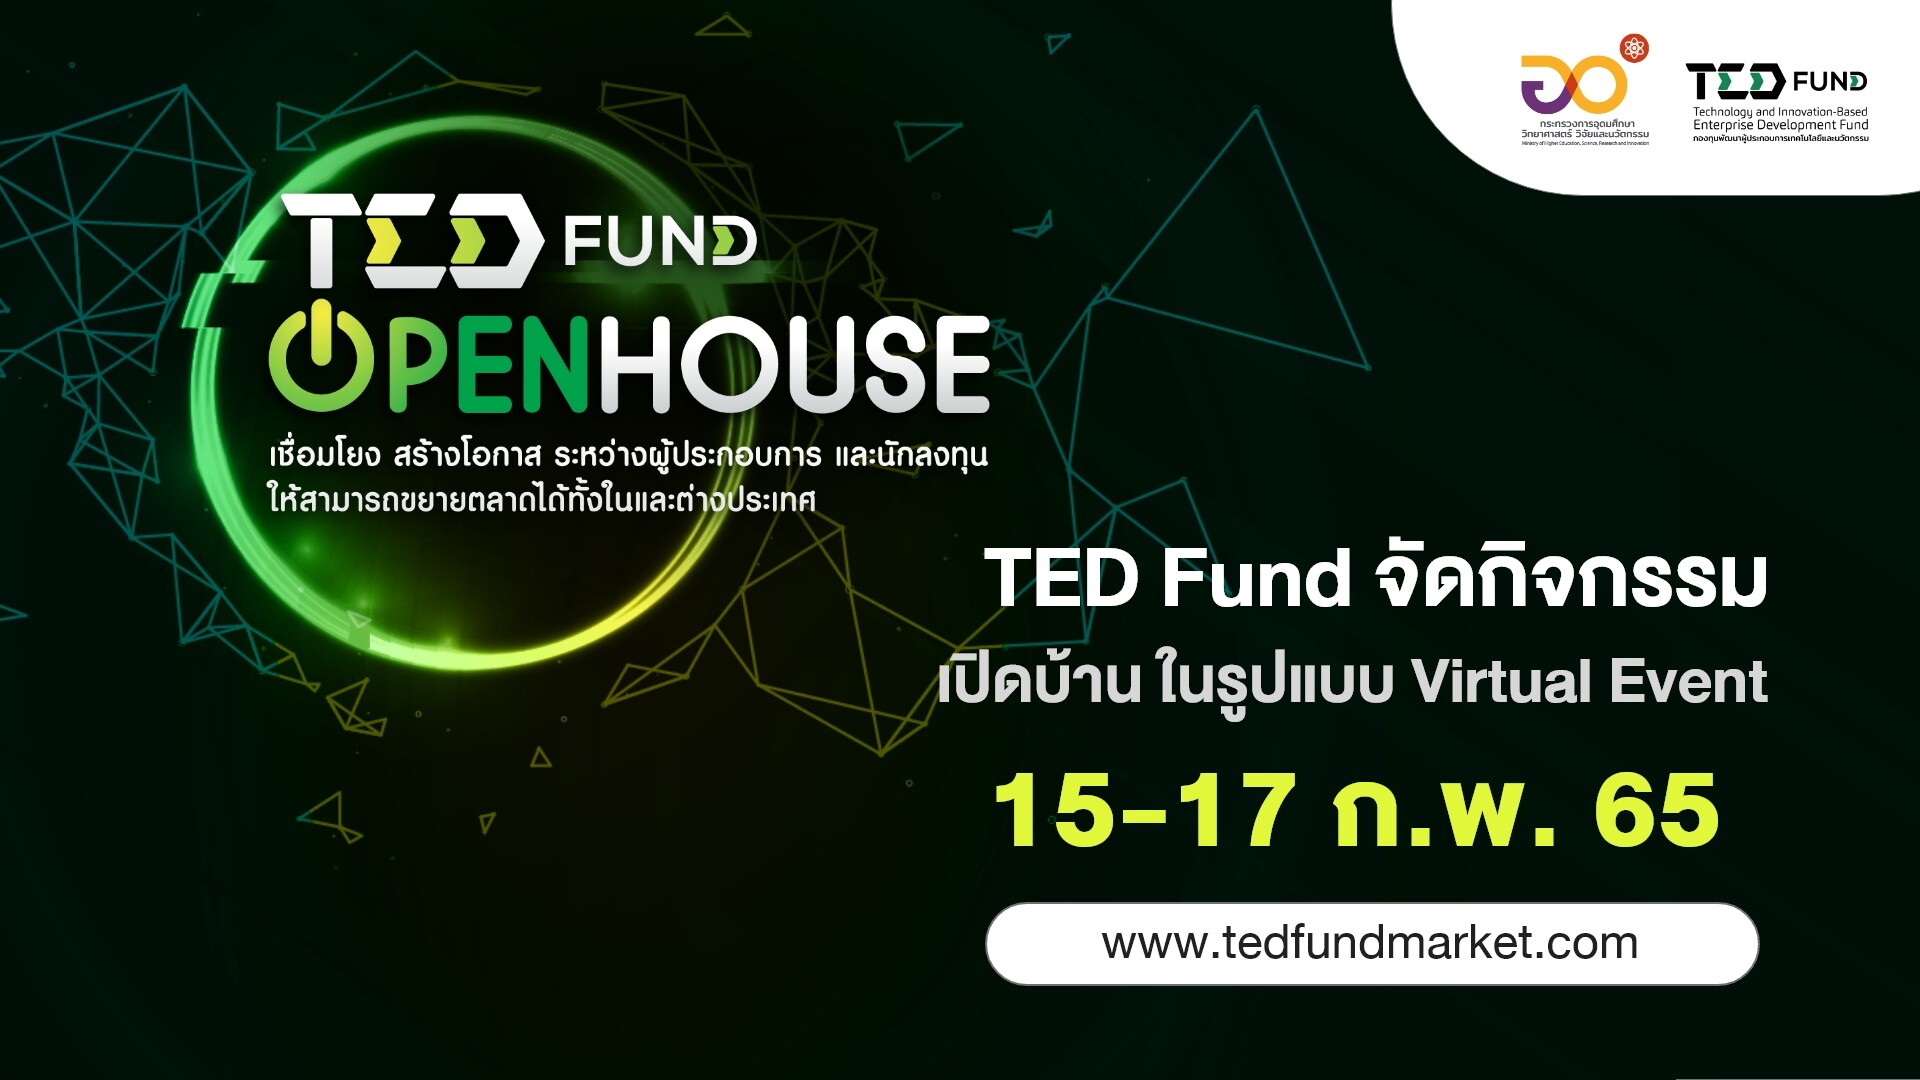 TED Fund จัดกิจกรรม Open House รูปแบบ Virtual Event จุดนัดพบผู้ประกอบการนวัตกรรมและนักลงทุน 15-17 ก.พ. 65 ทาง www.tedfundmarket.com